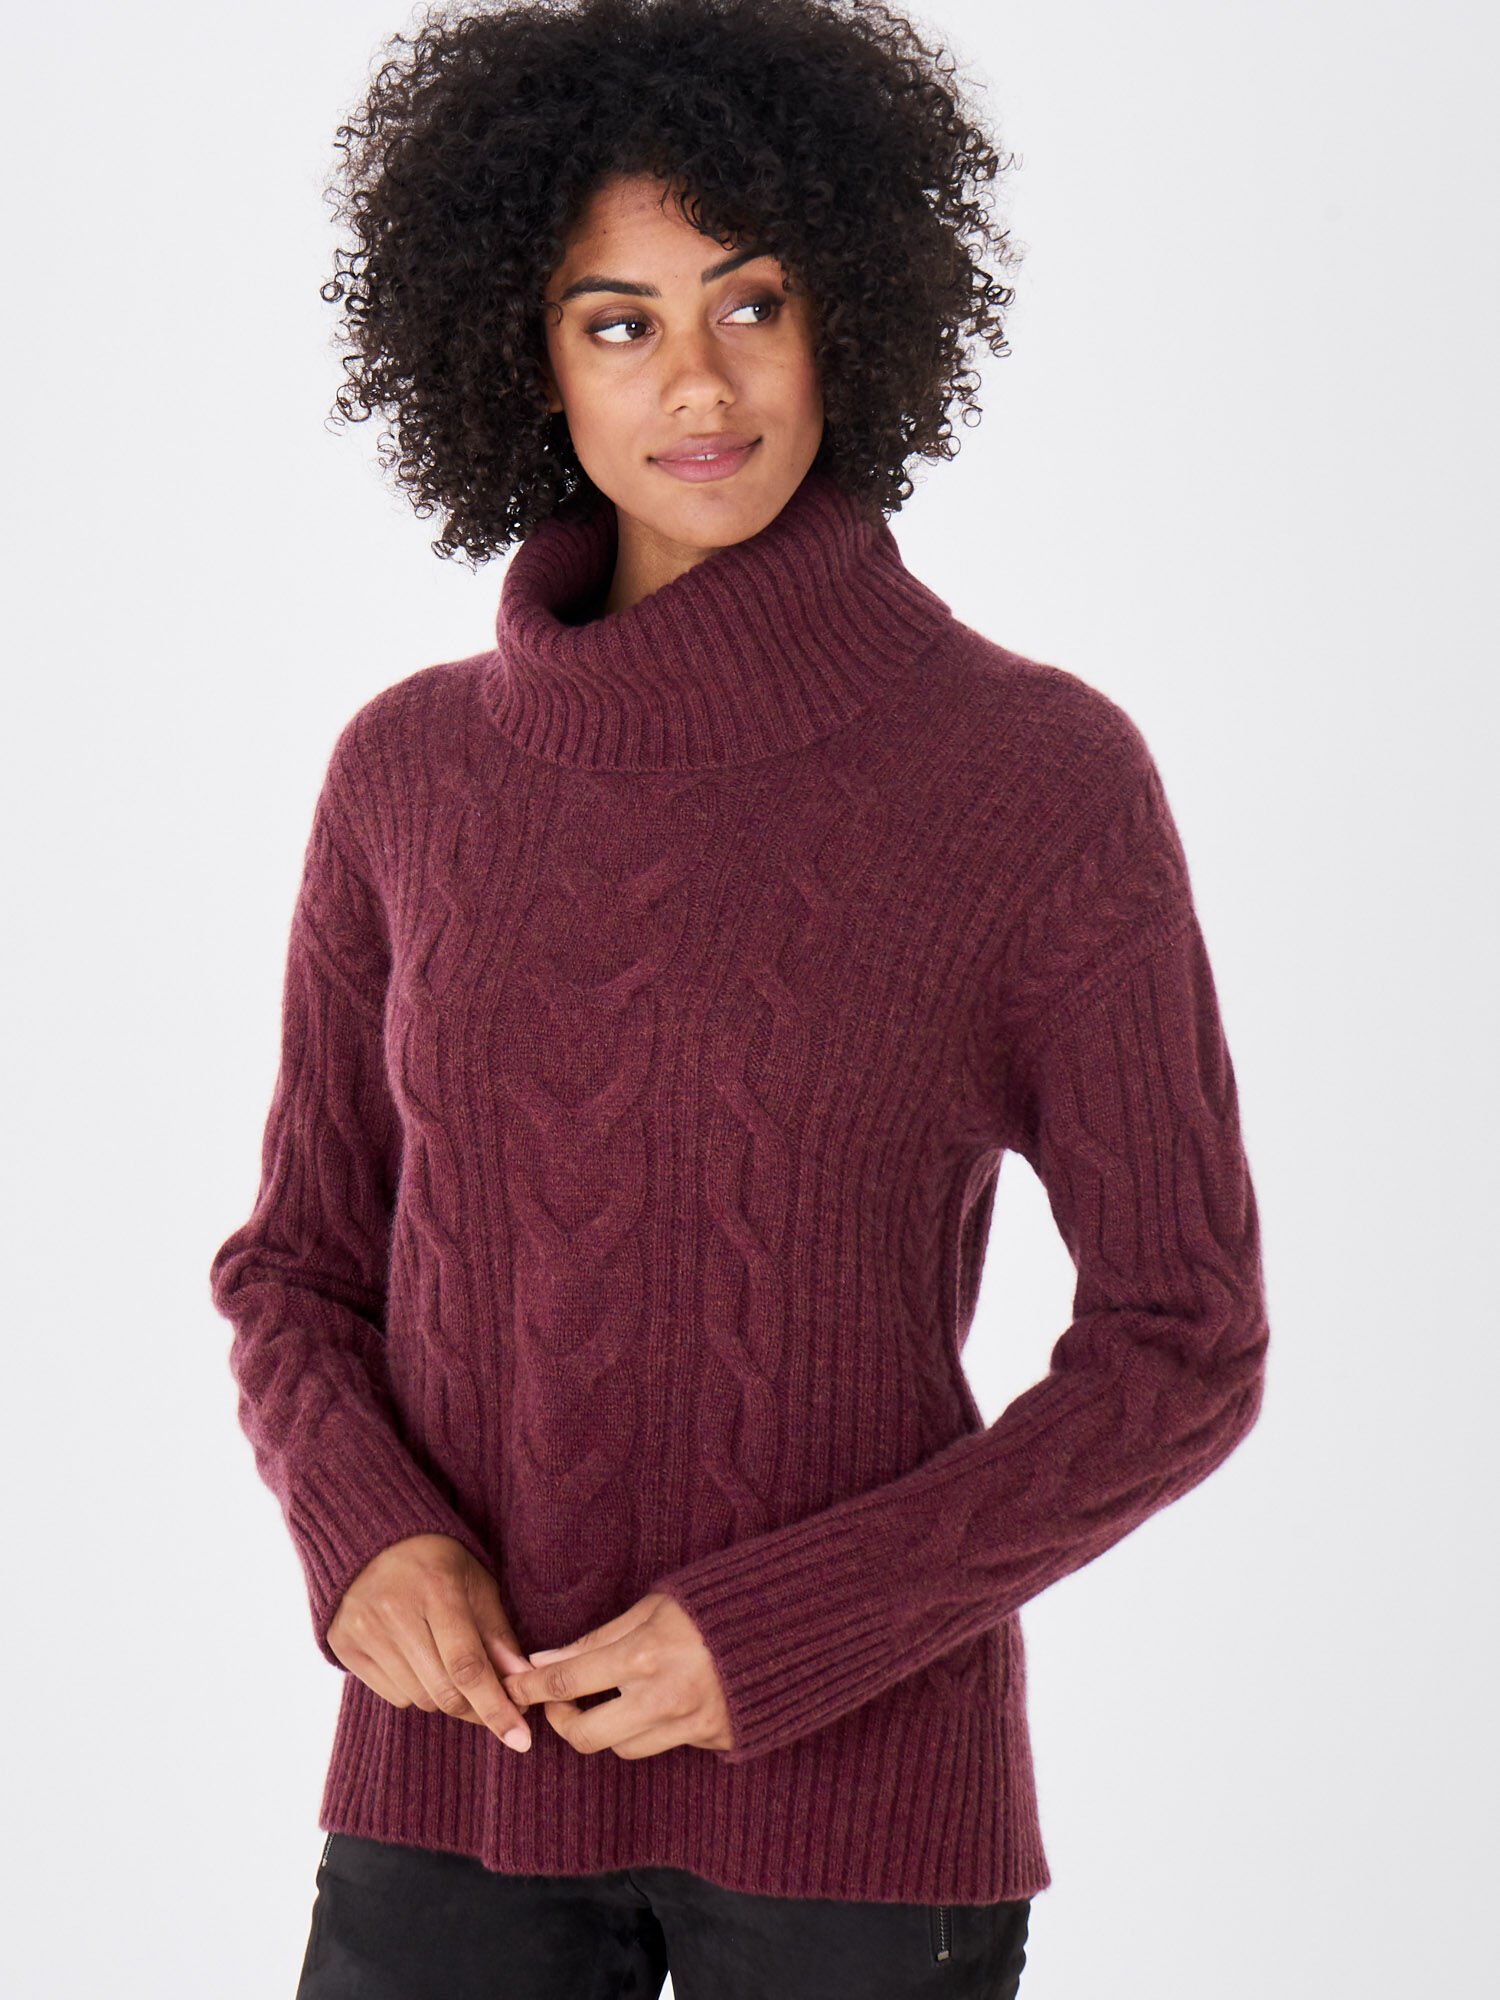 Cashmere Knit Turtleneck Sweater